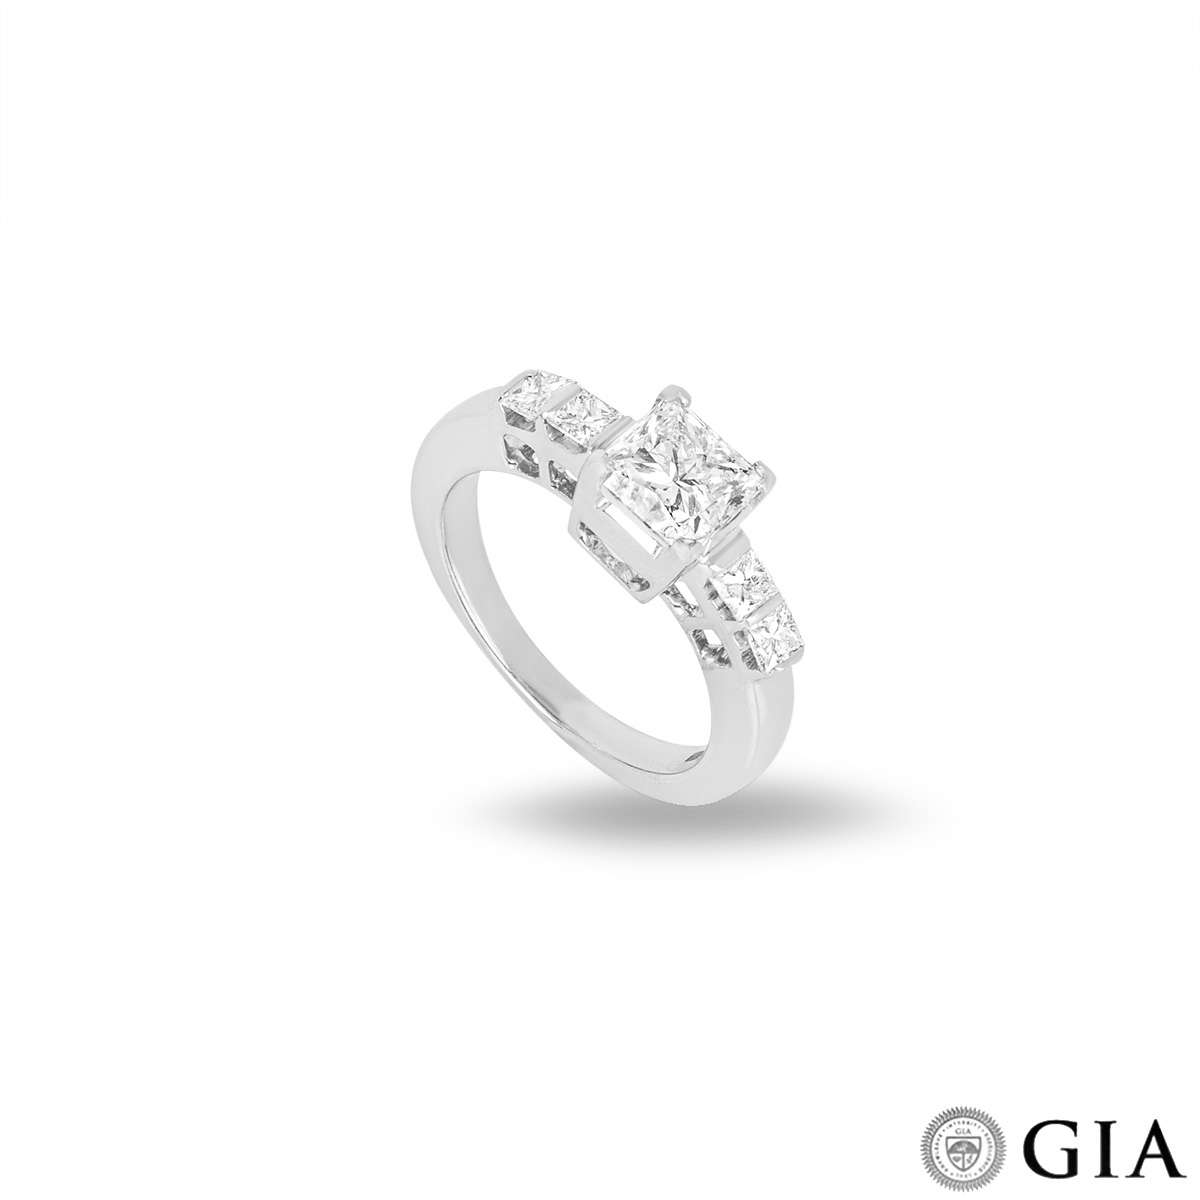 White Gold Princess Cut Diamond Ring 1.15ct I/VVS1